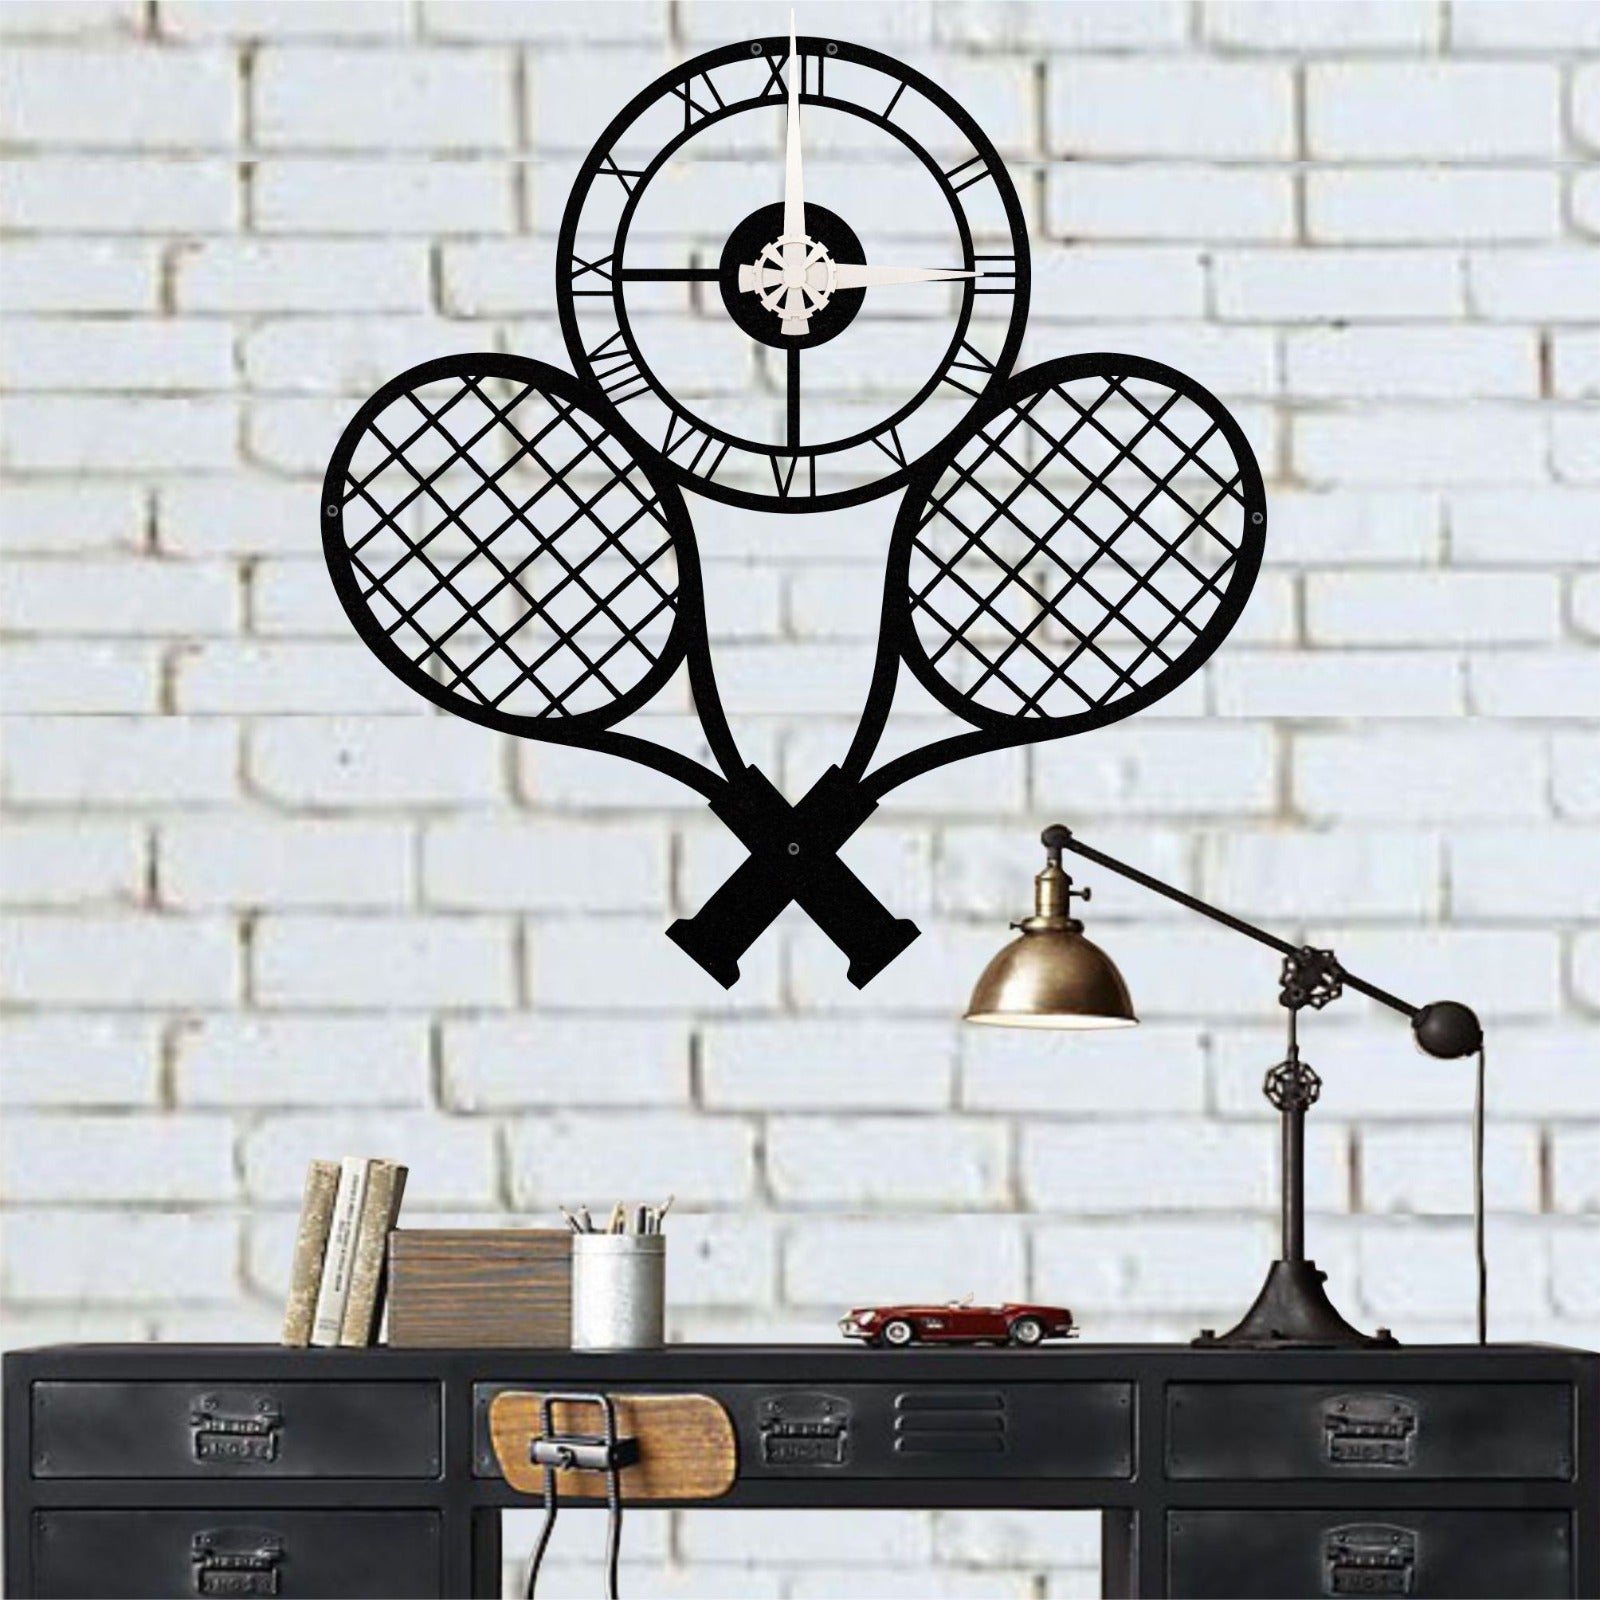 Metal Wall Clock with Tennis Racket Figure